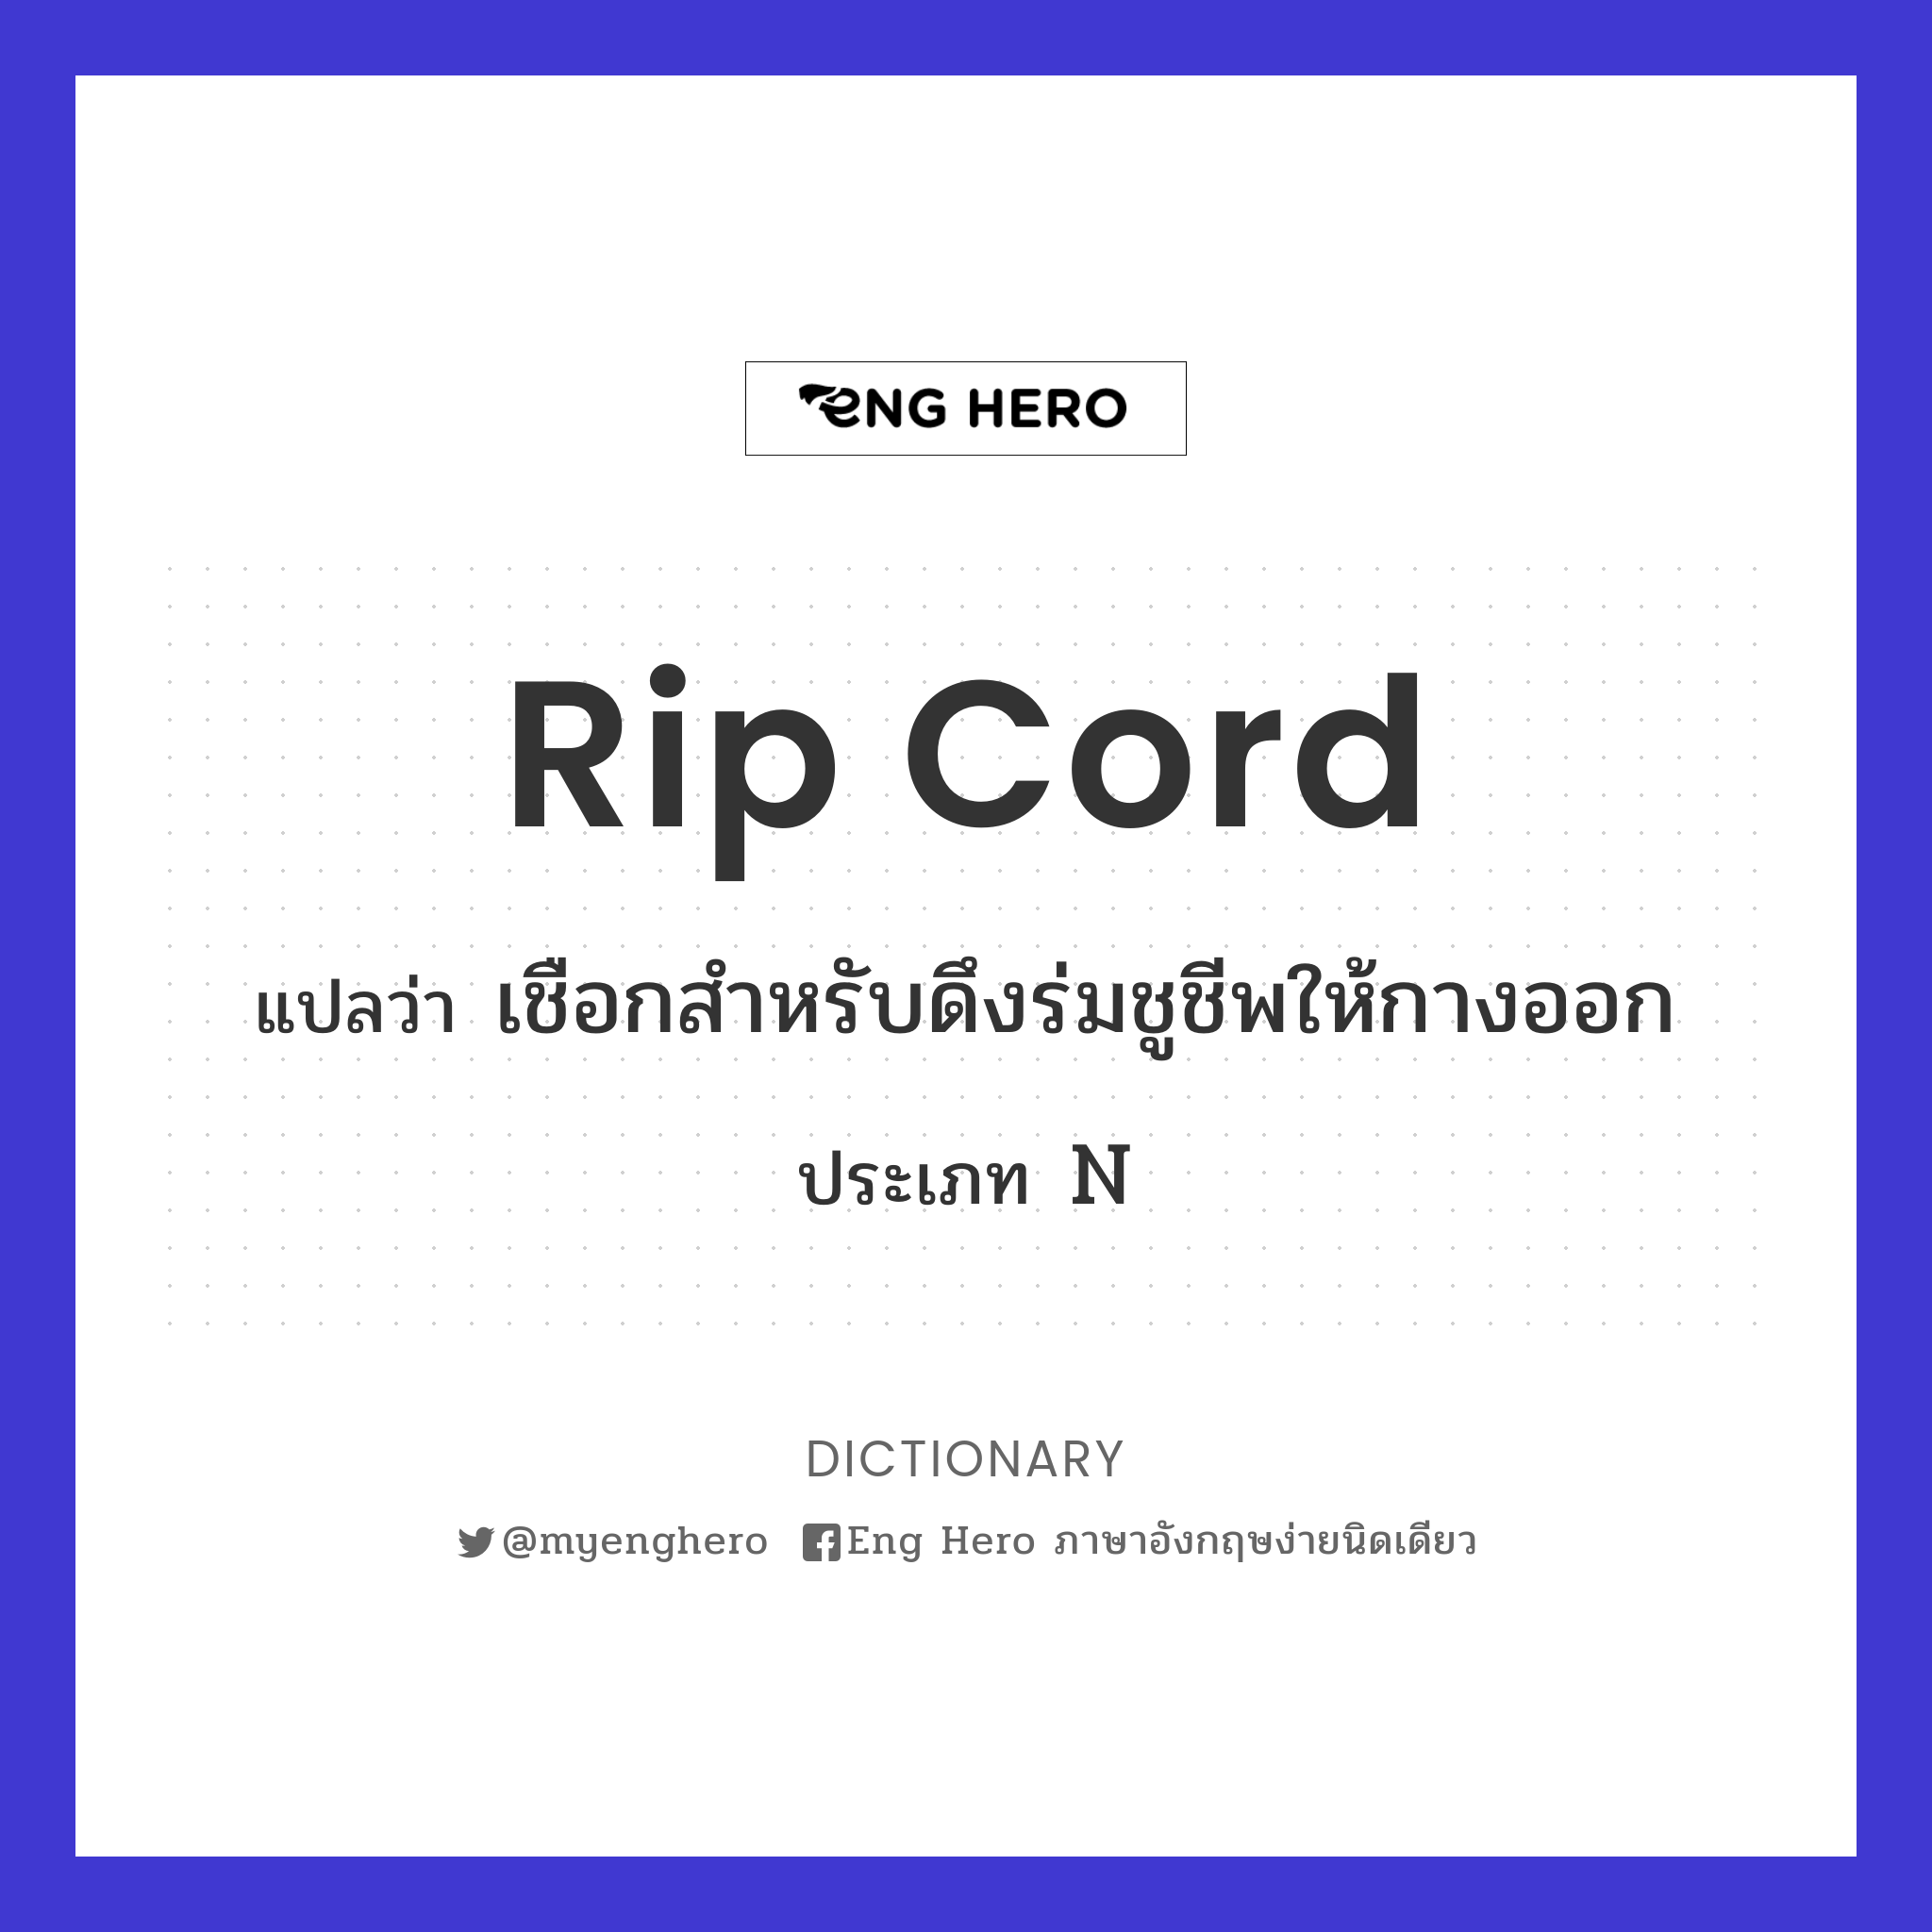 rip cord